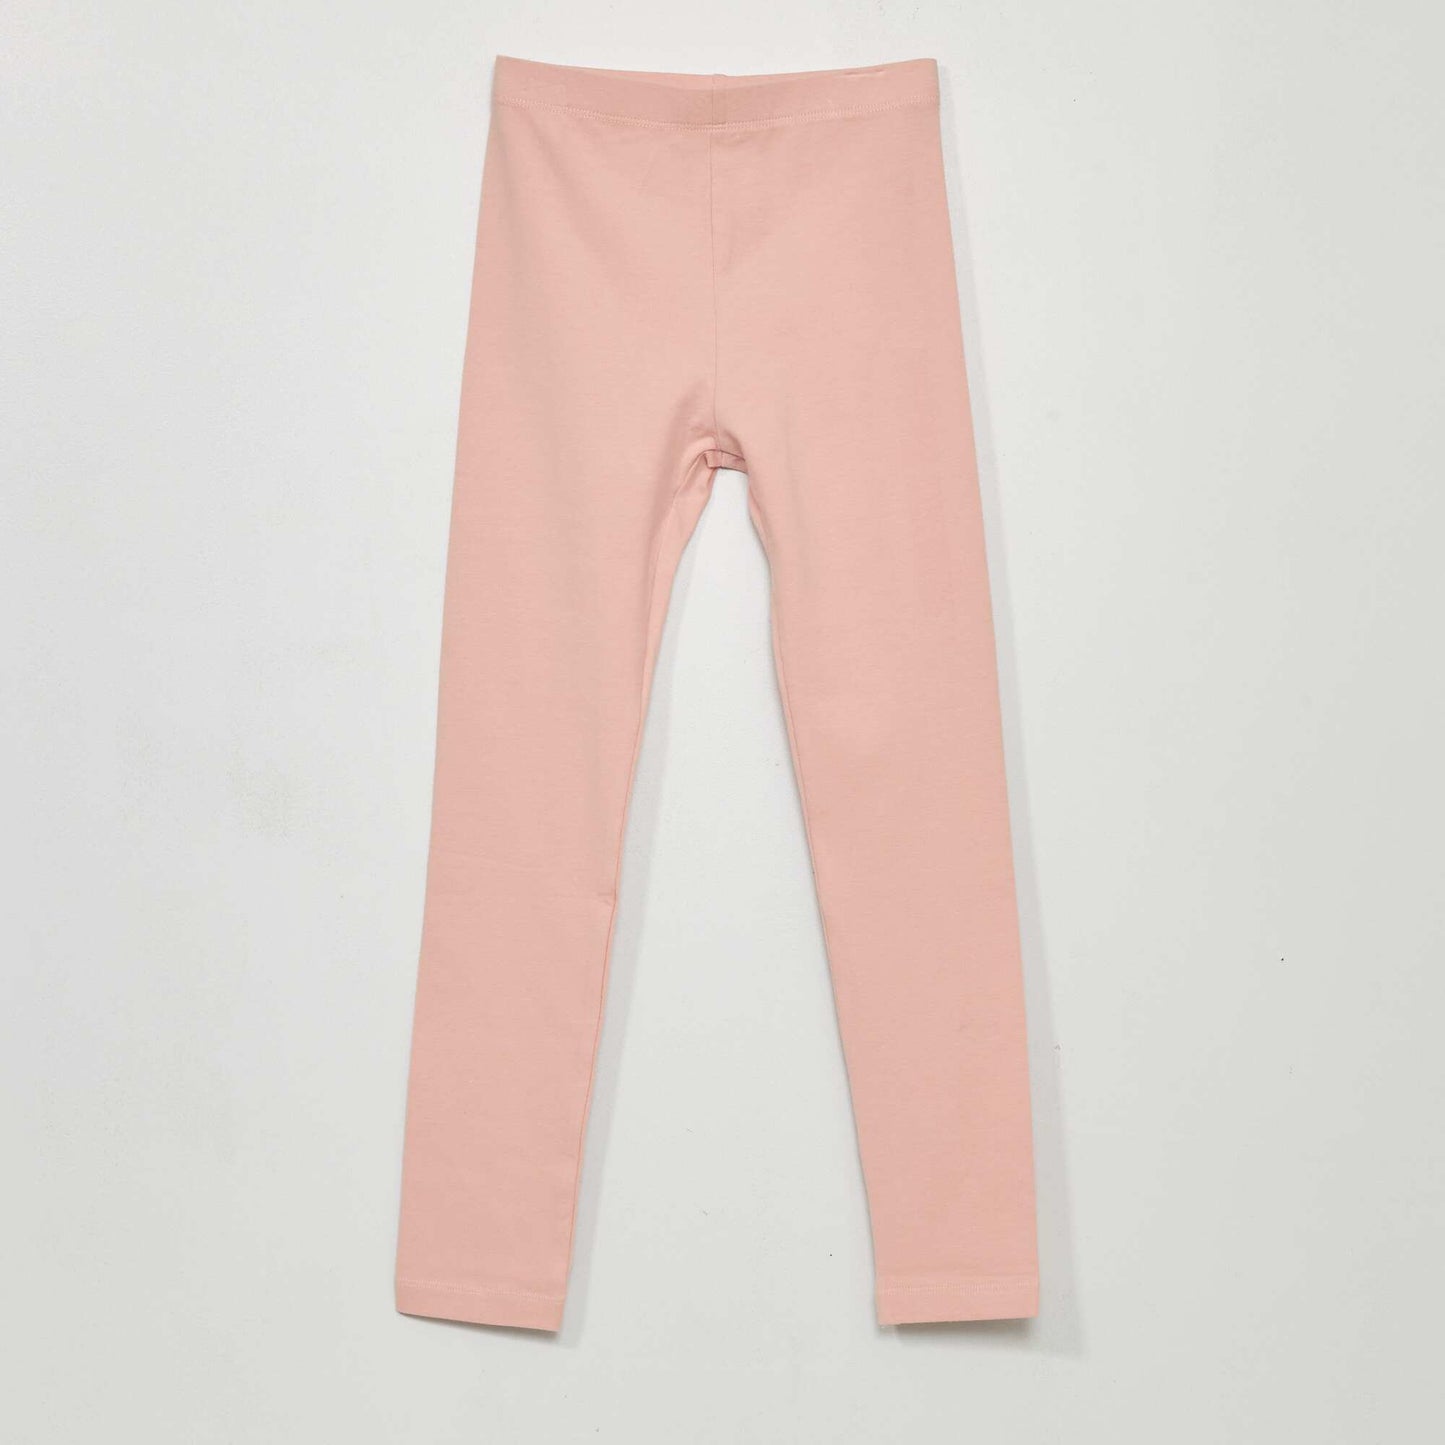 Long stretch leggings pink